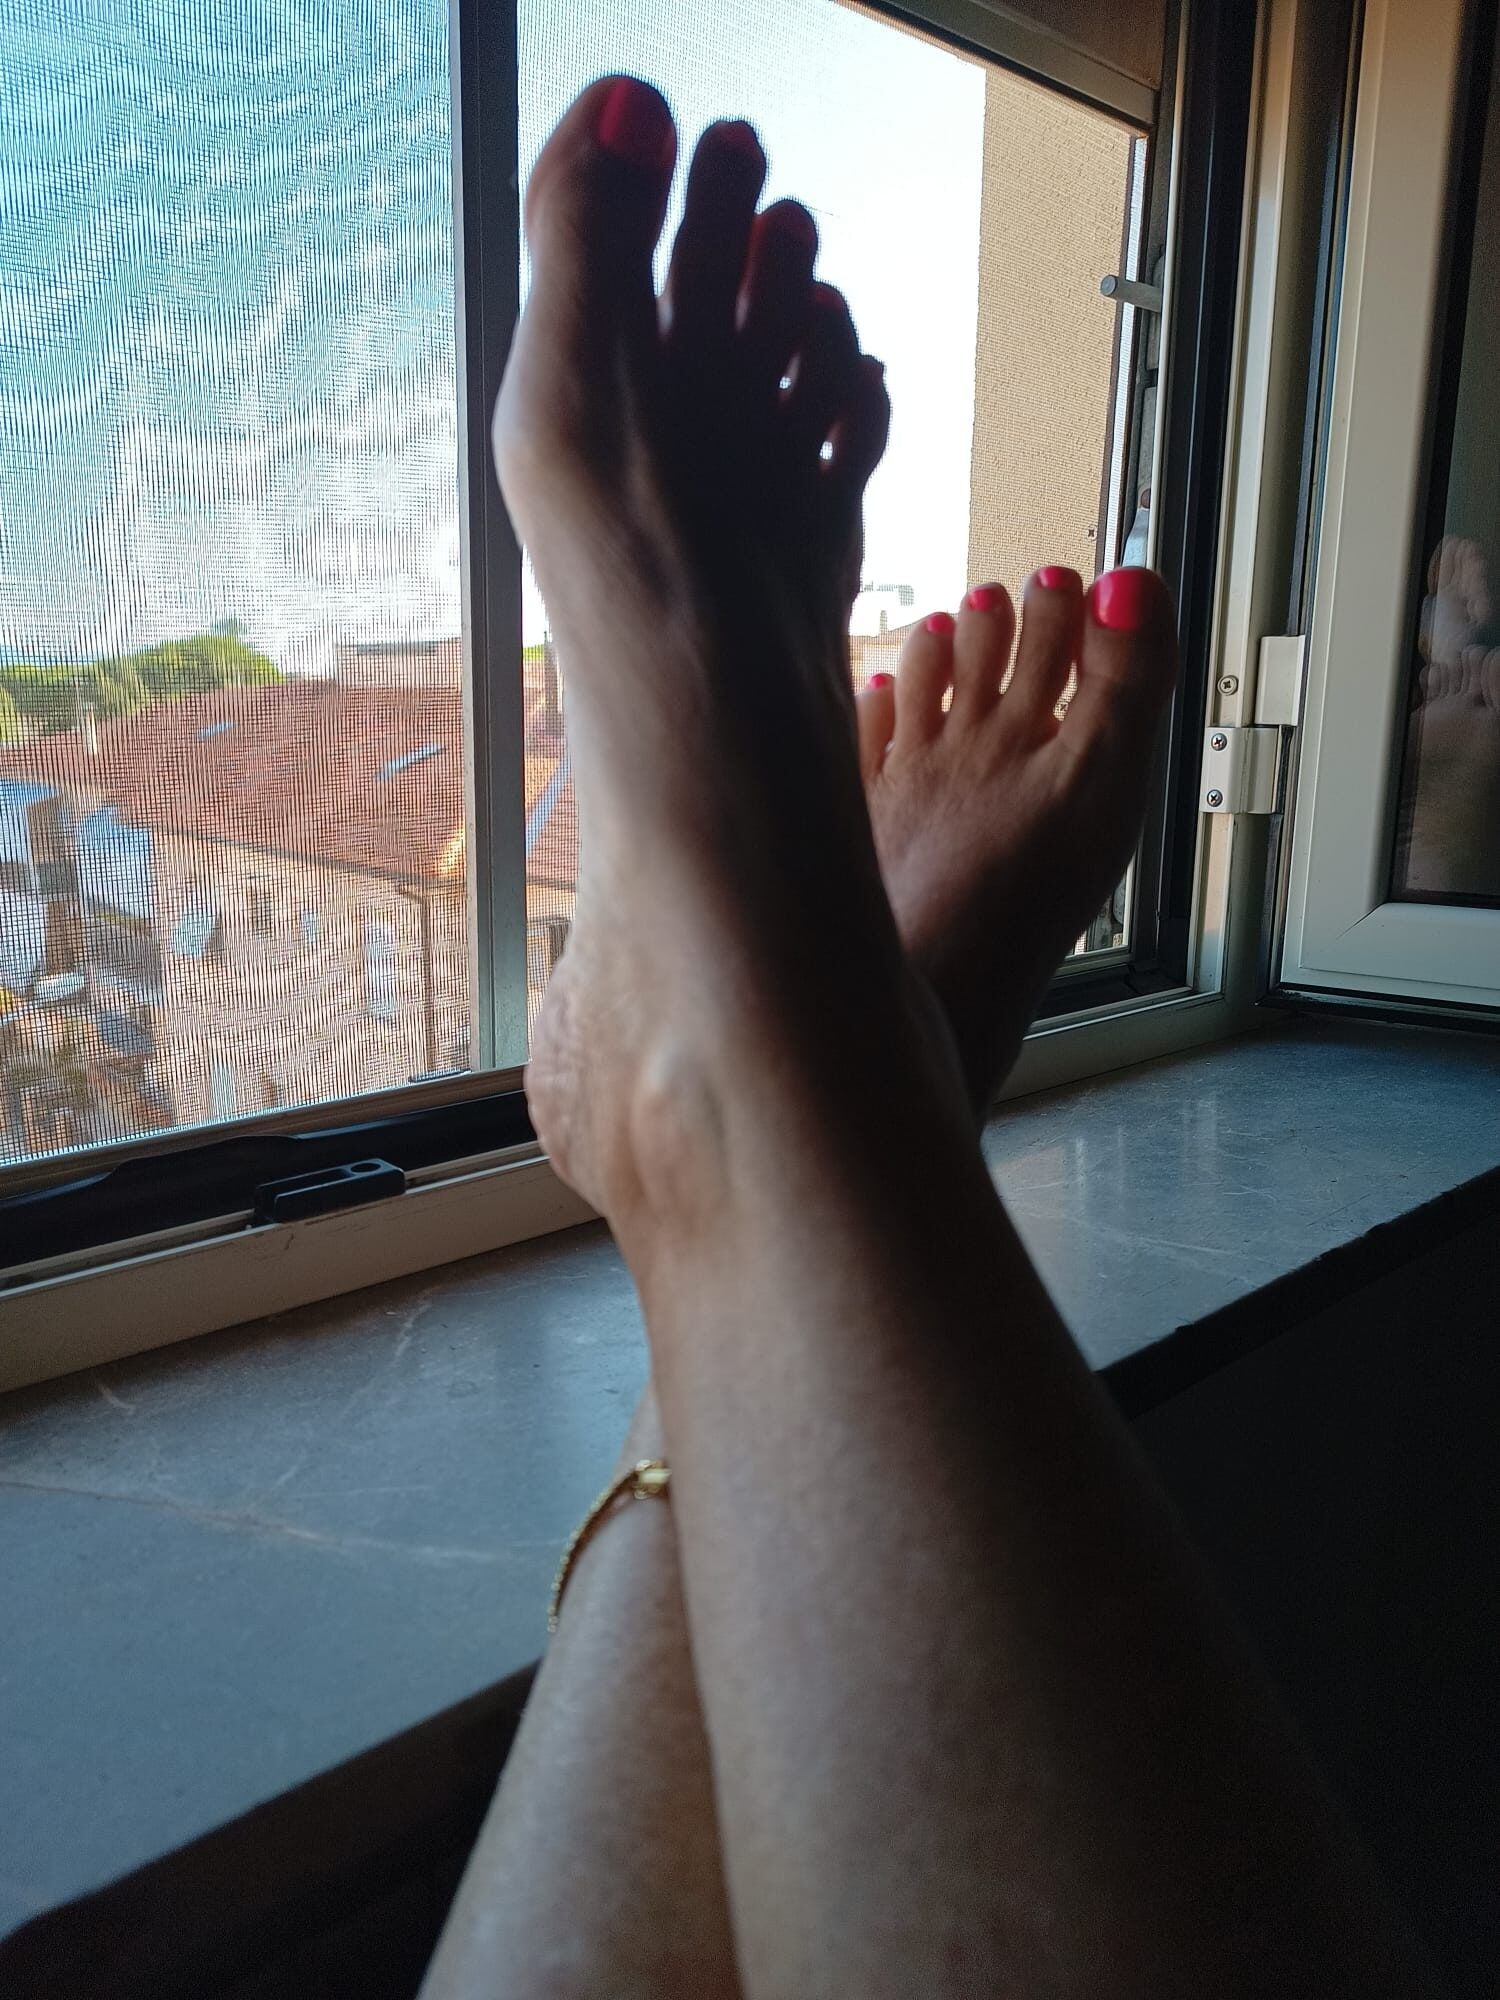 Sexy feet